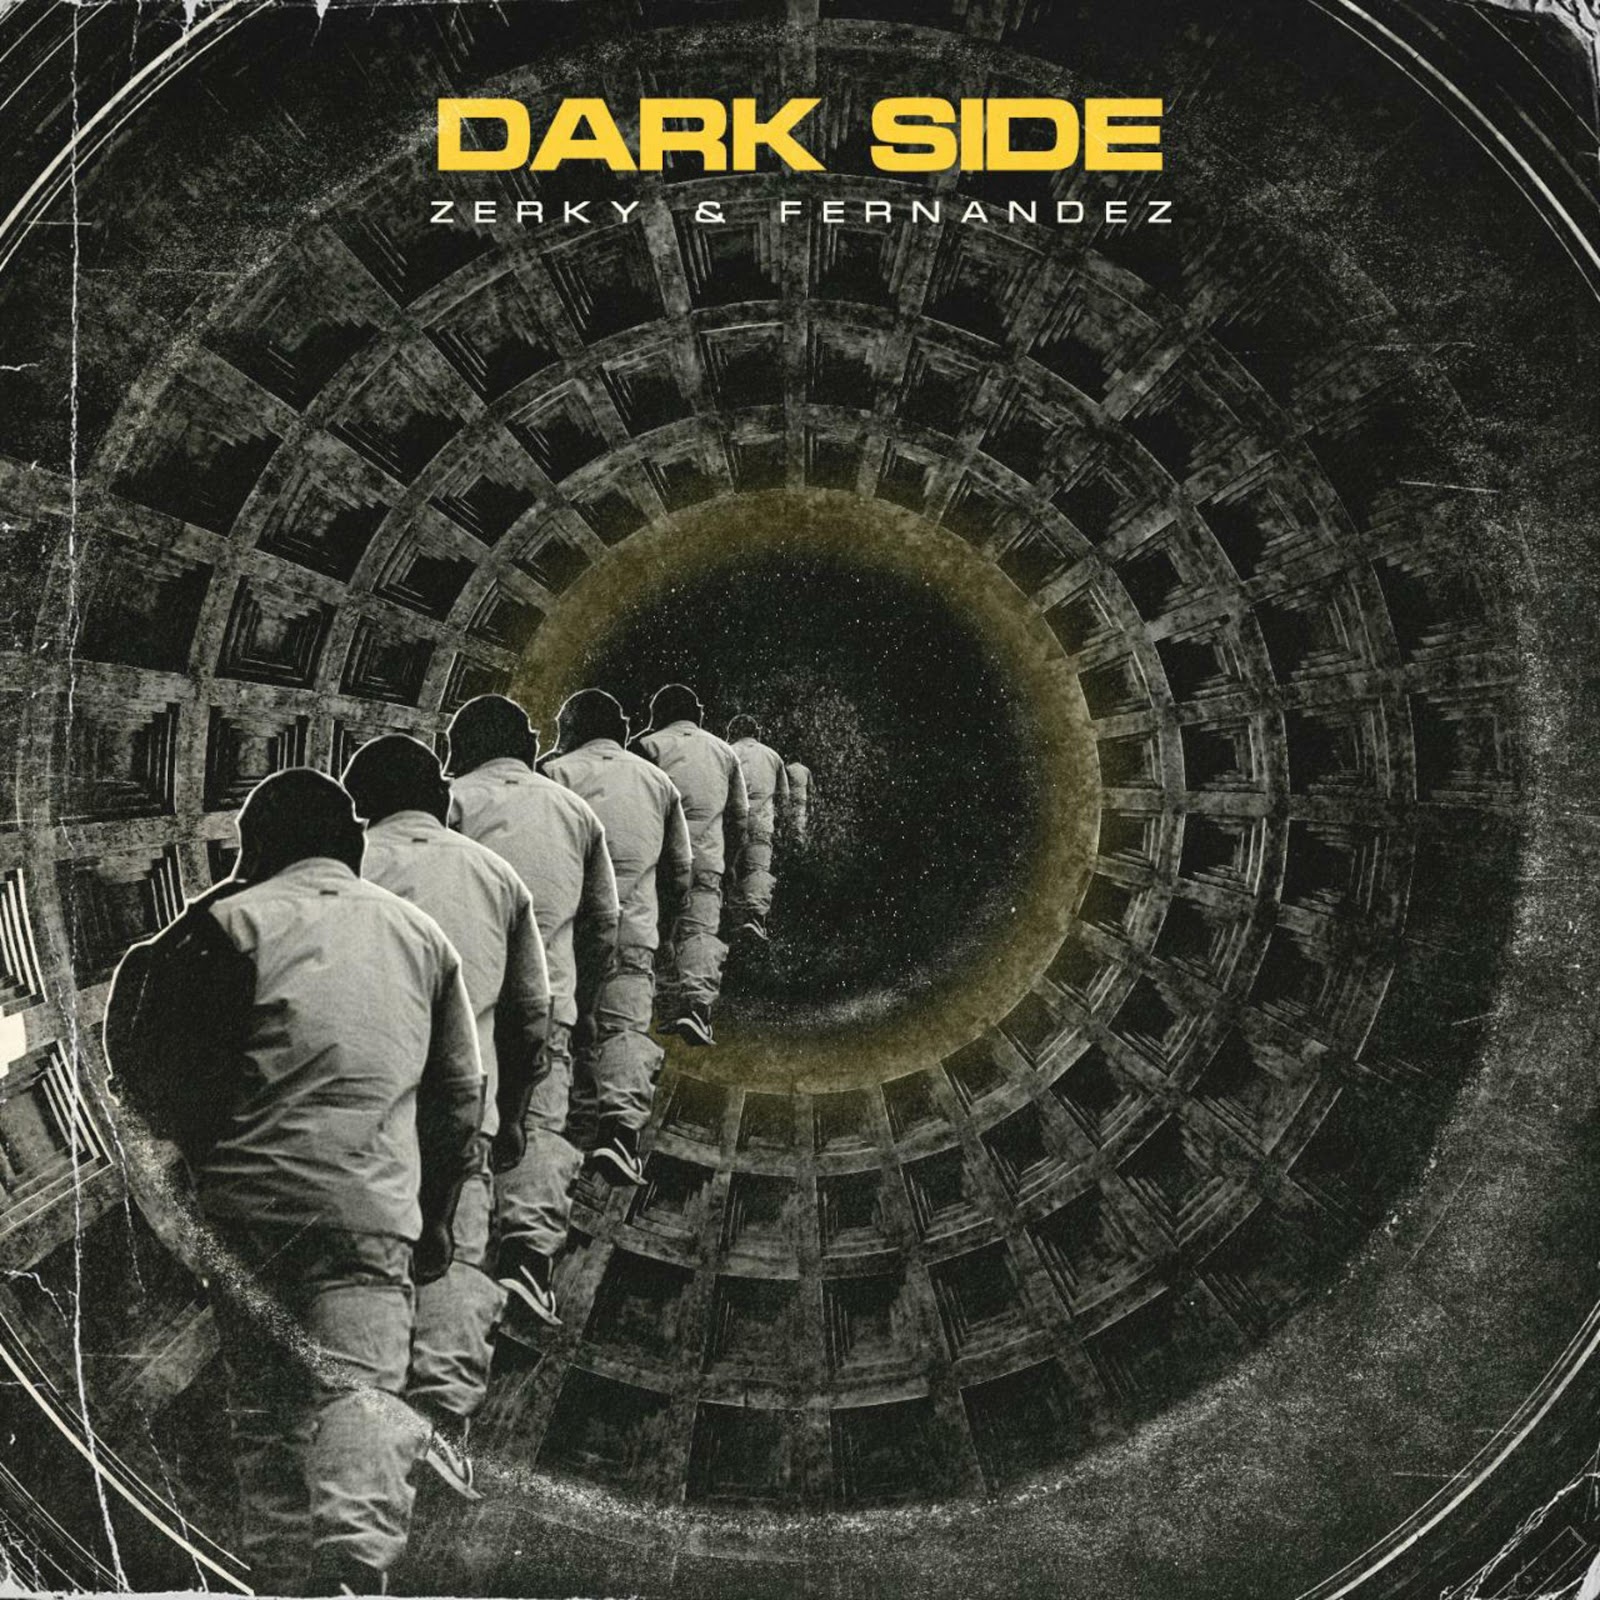 Zerky lança "Dark Side", parceria com Fernandez